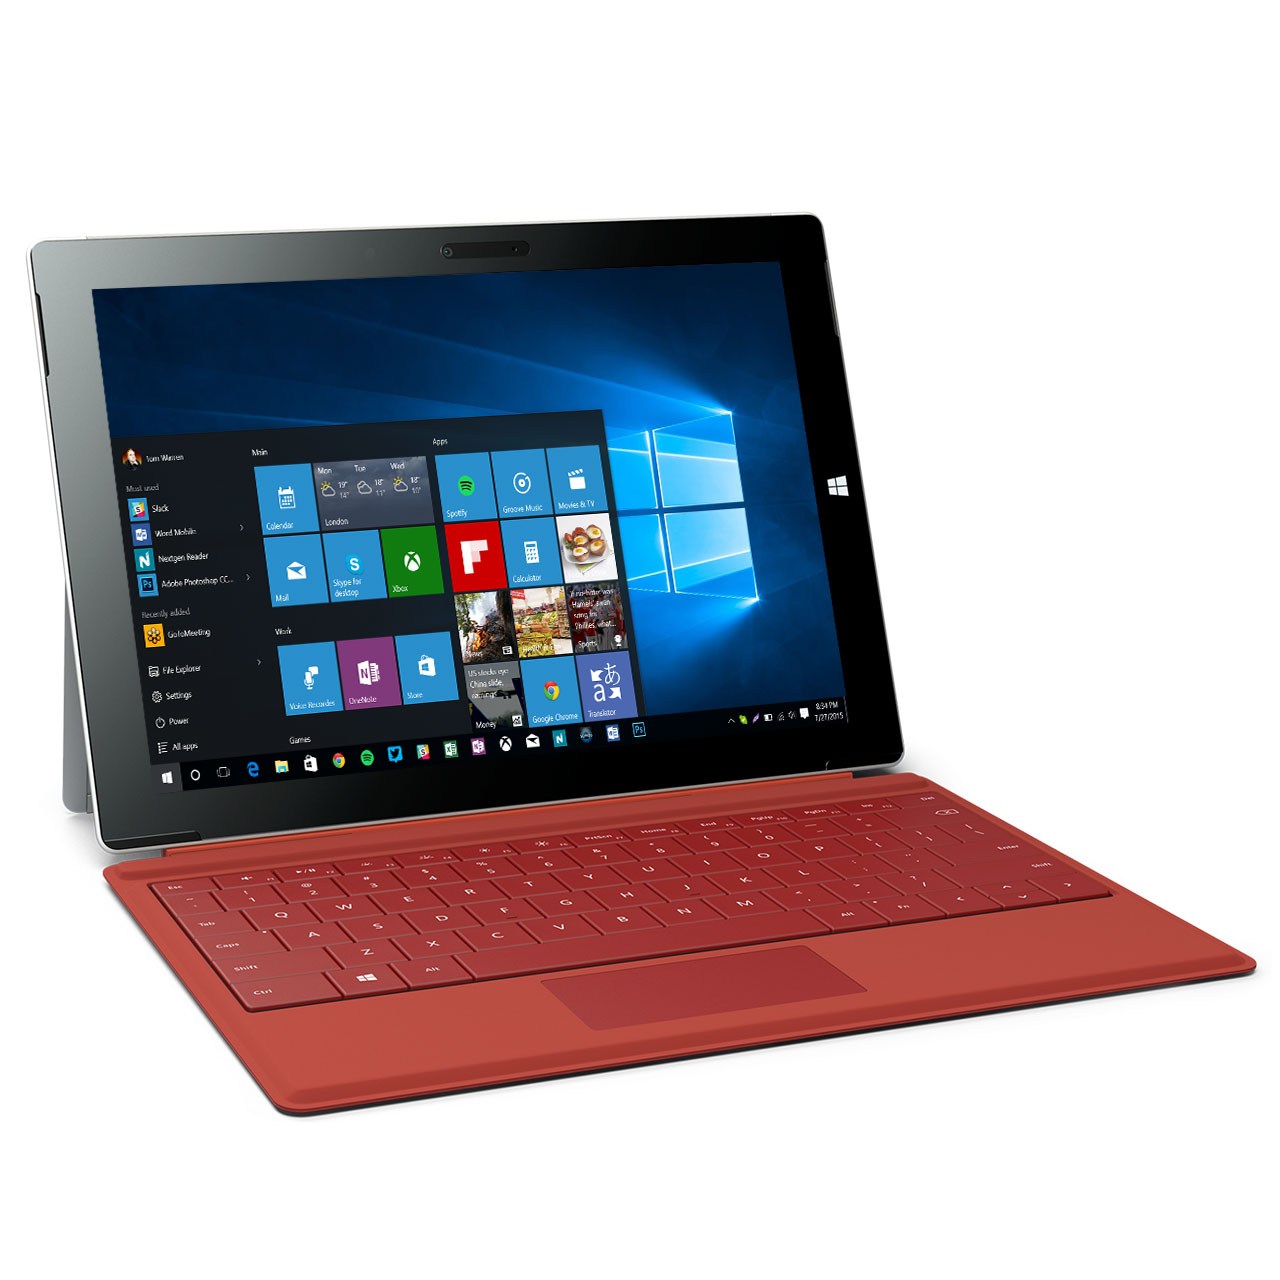 تبلت مایکروسافت مدل Surface 3 - B به همراه کیبورد ظرفیت 64 گیگابایت